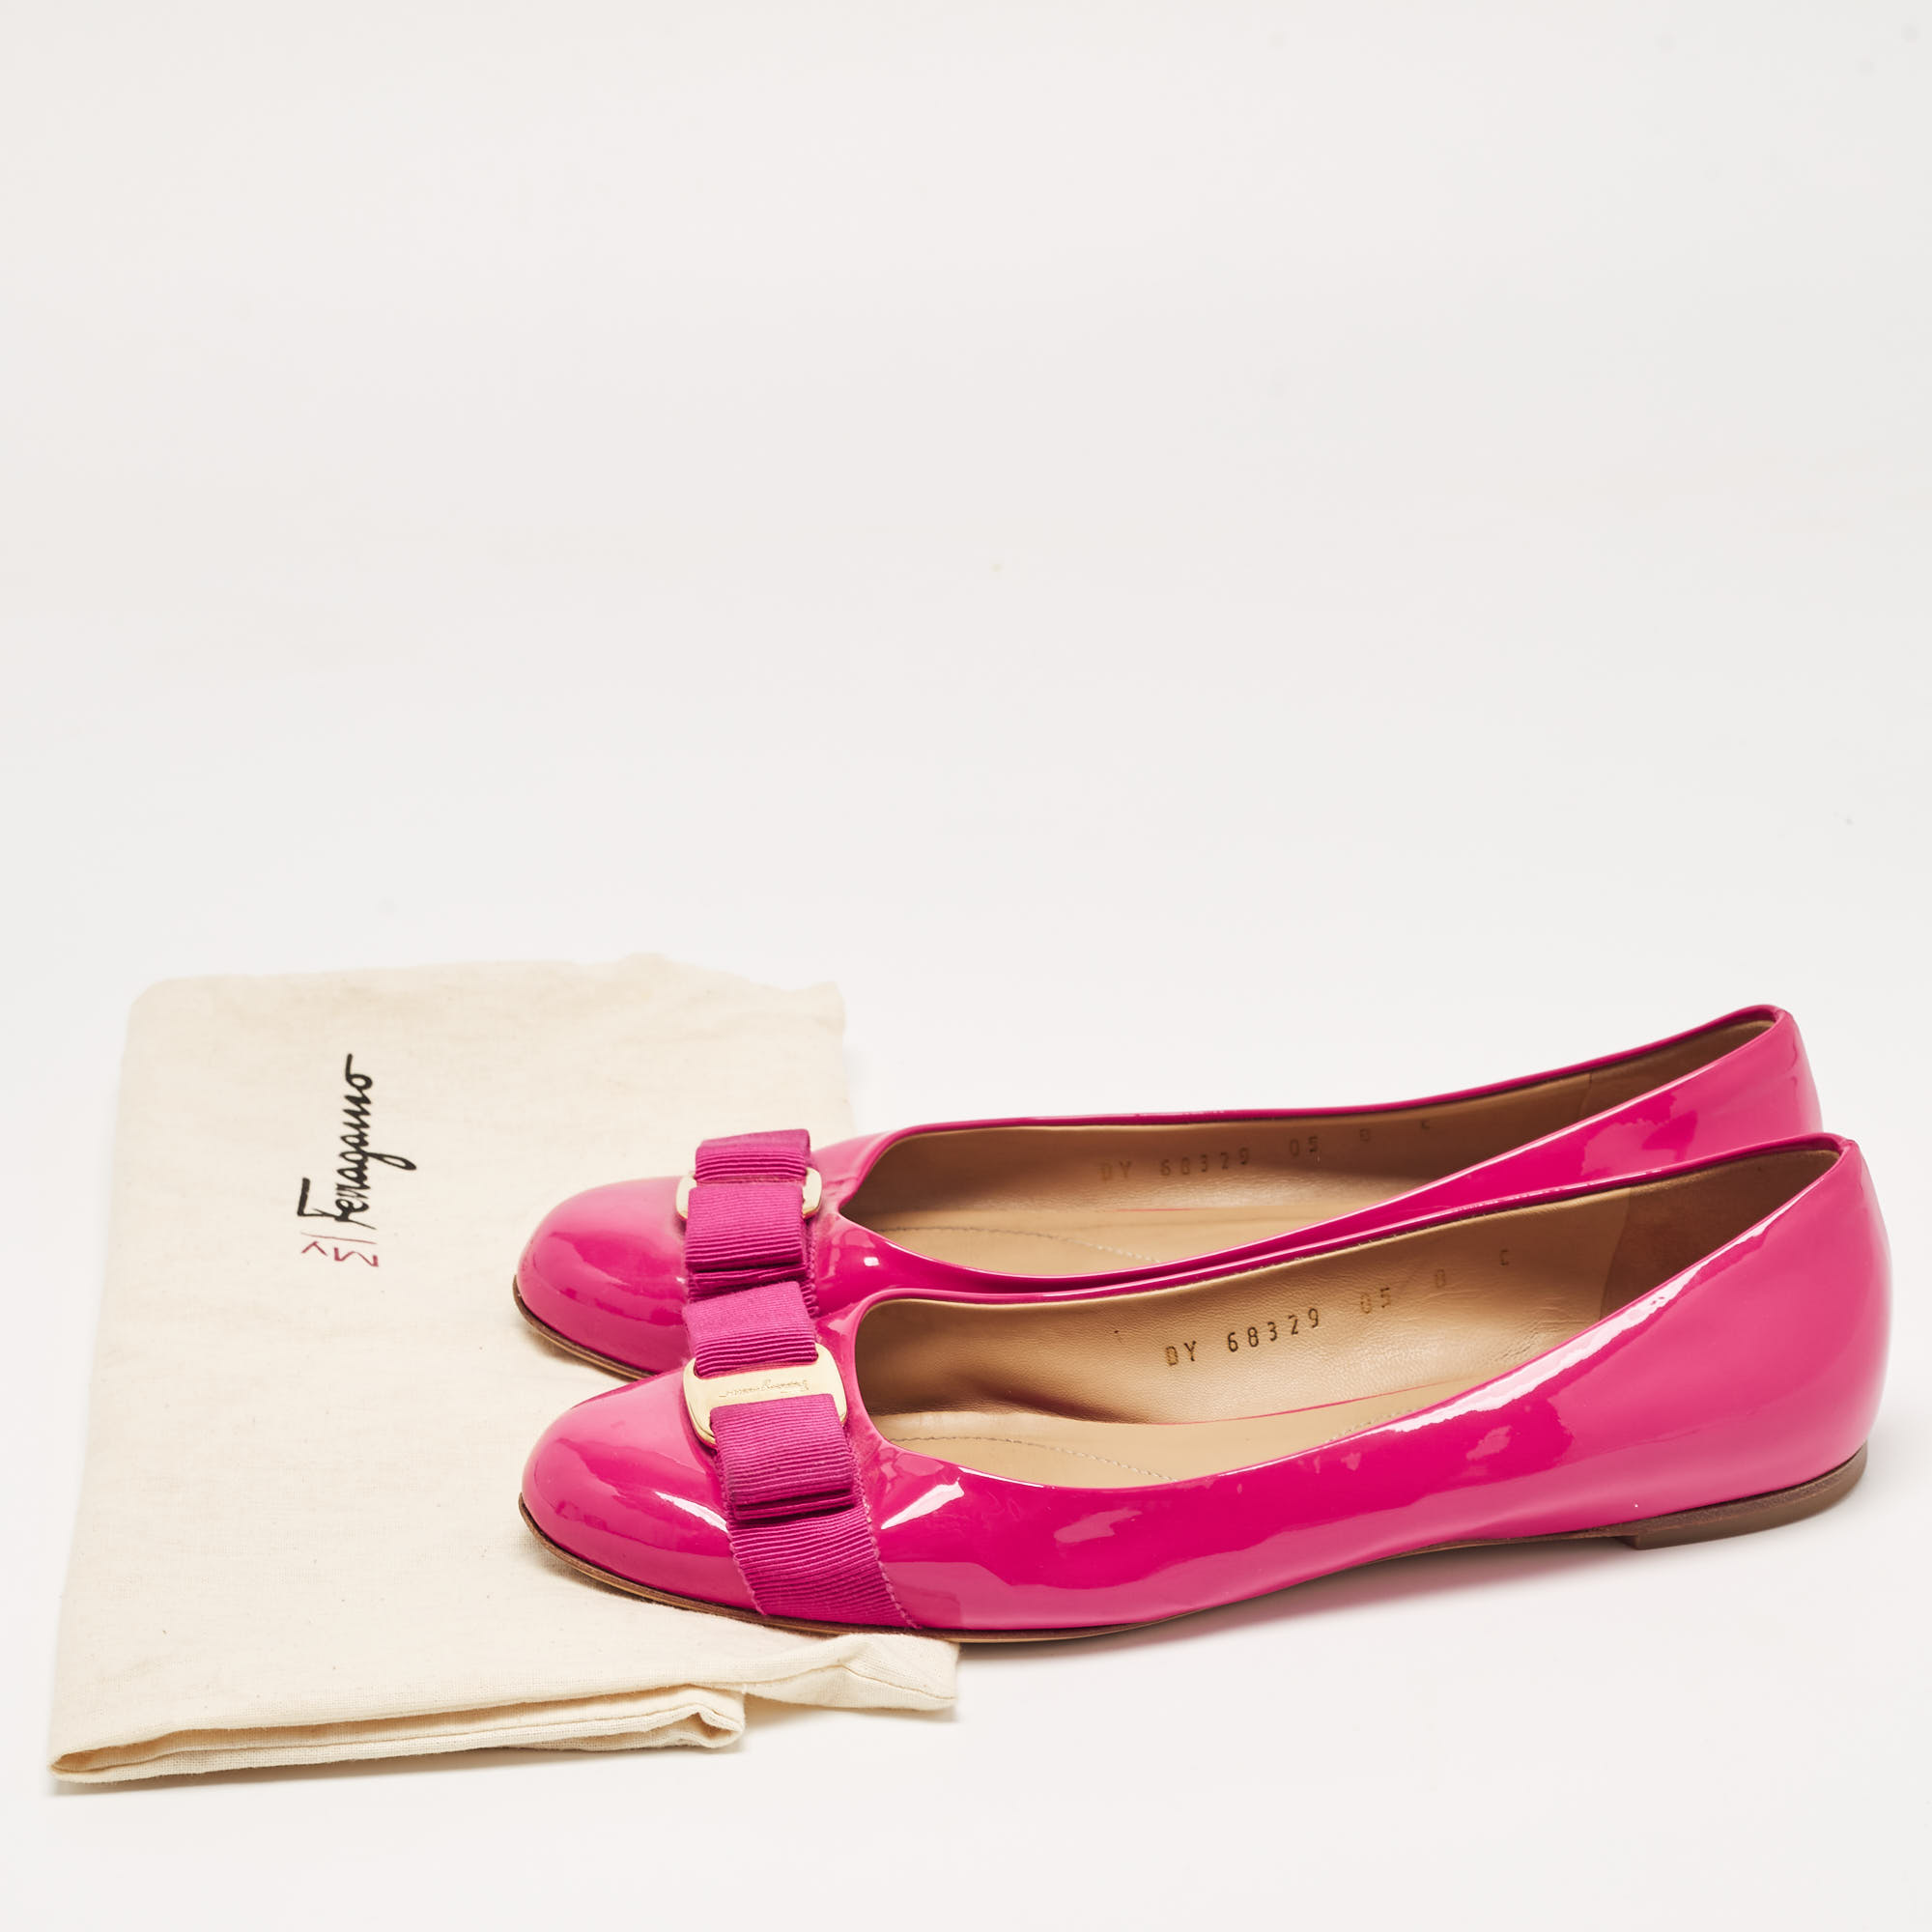 Salvatore Ferragamo Pink Patent Leather Vara Bow Ballet Flats Size 38.5